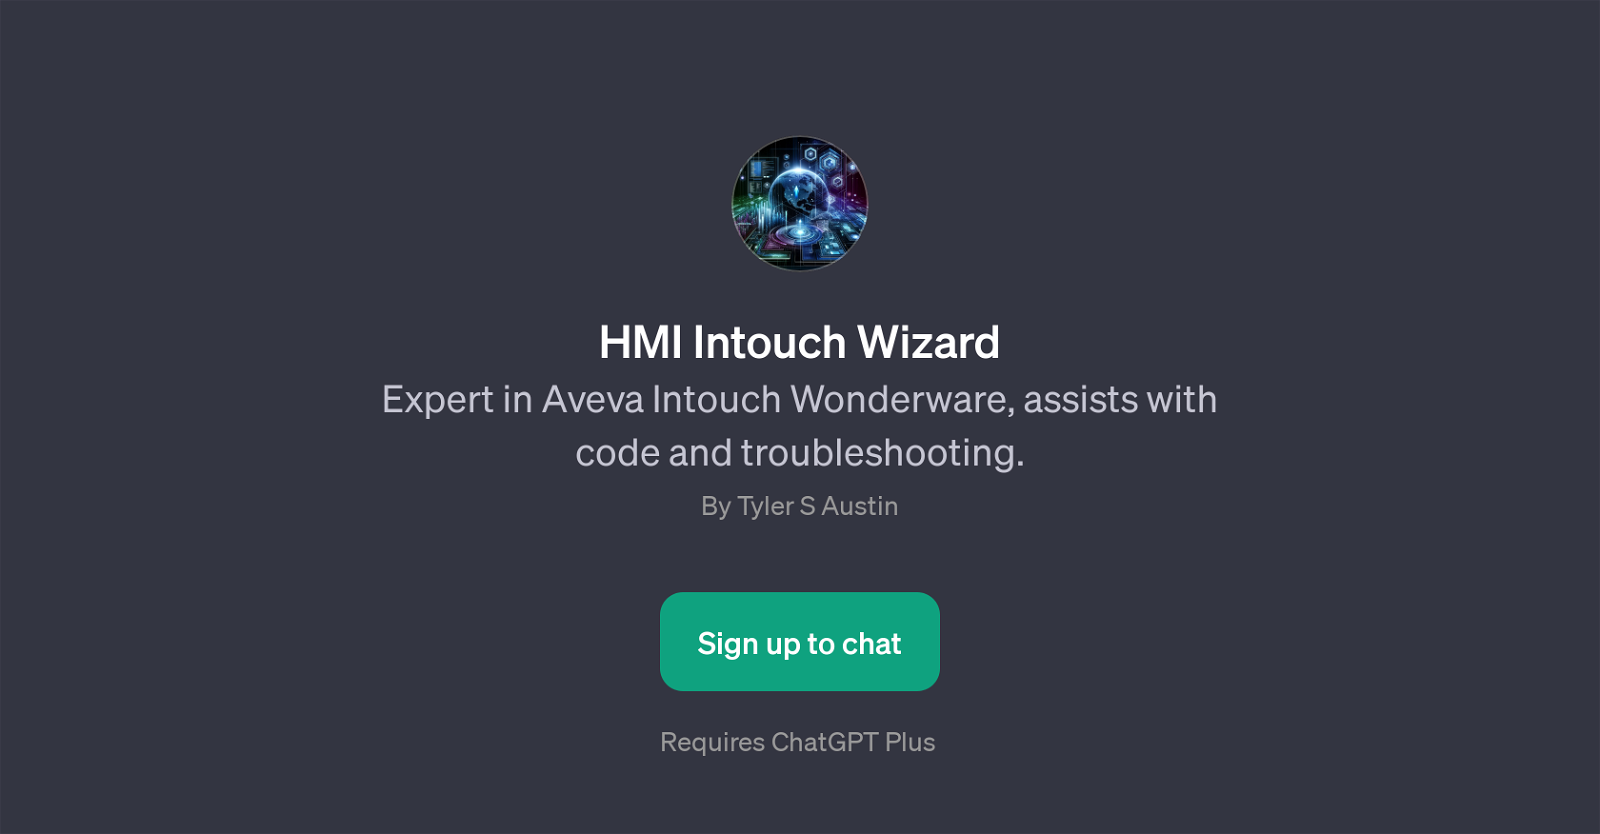 HMI Intouch Wizard website